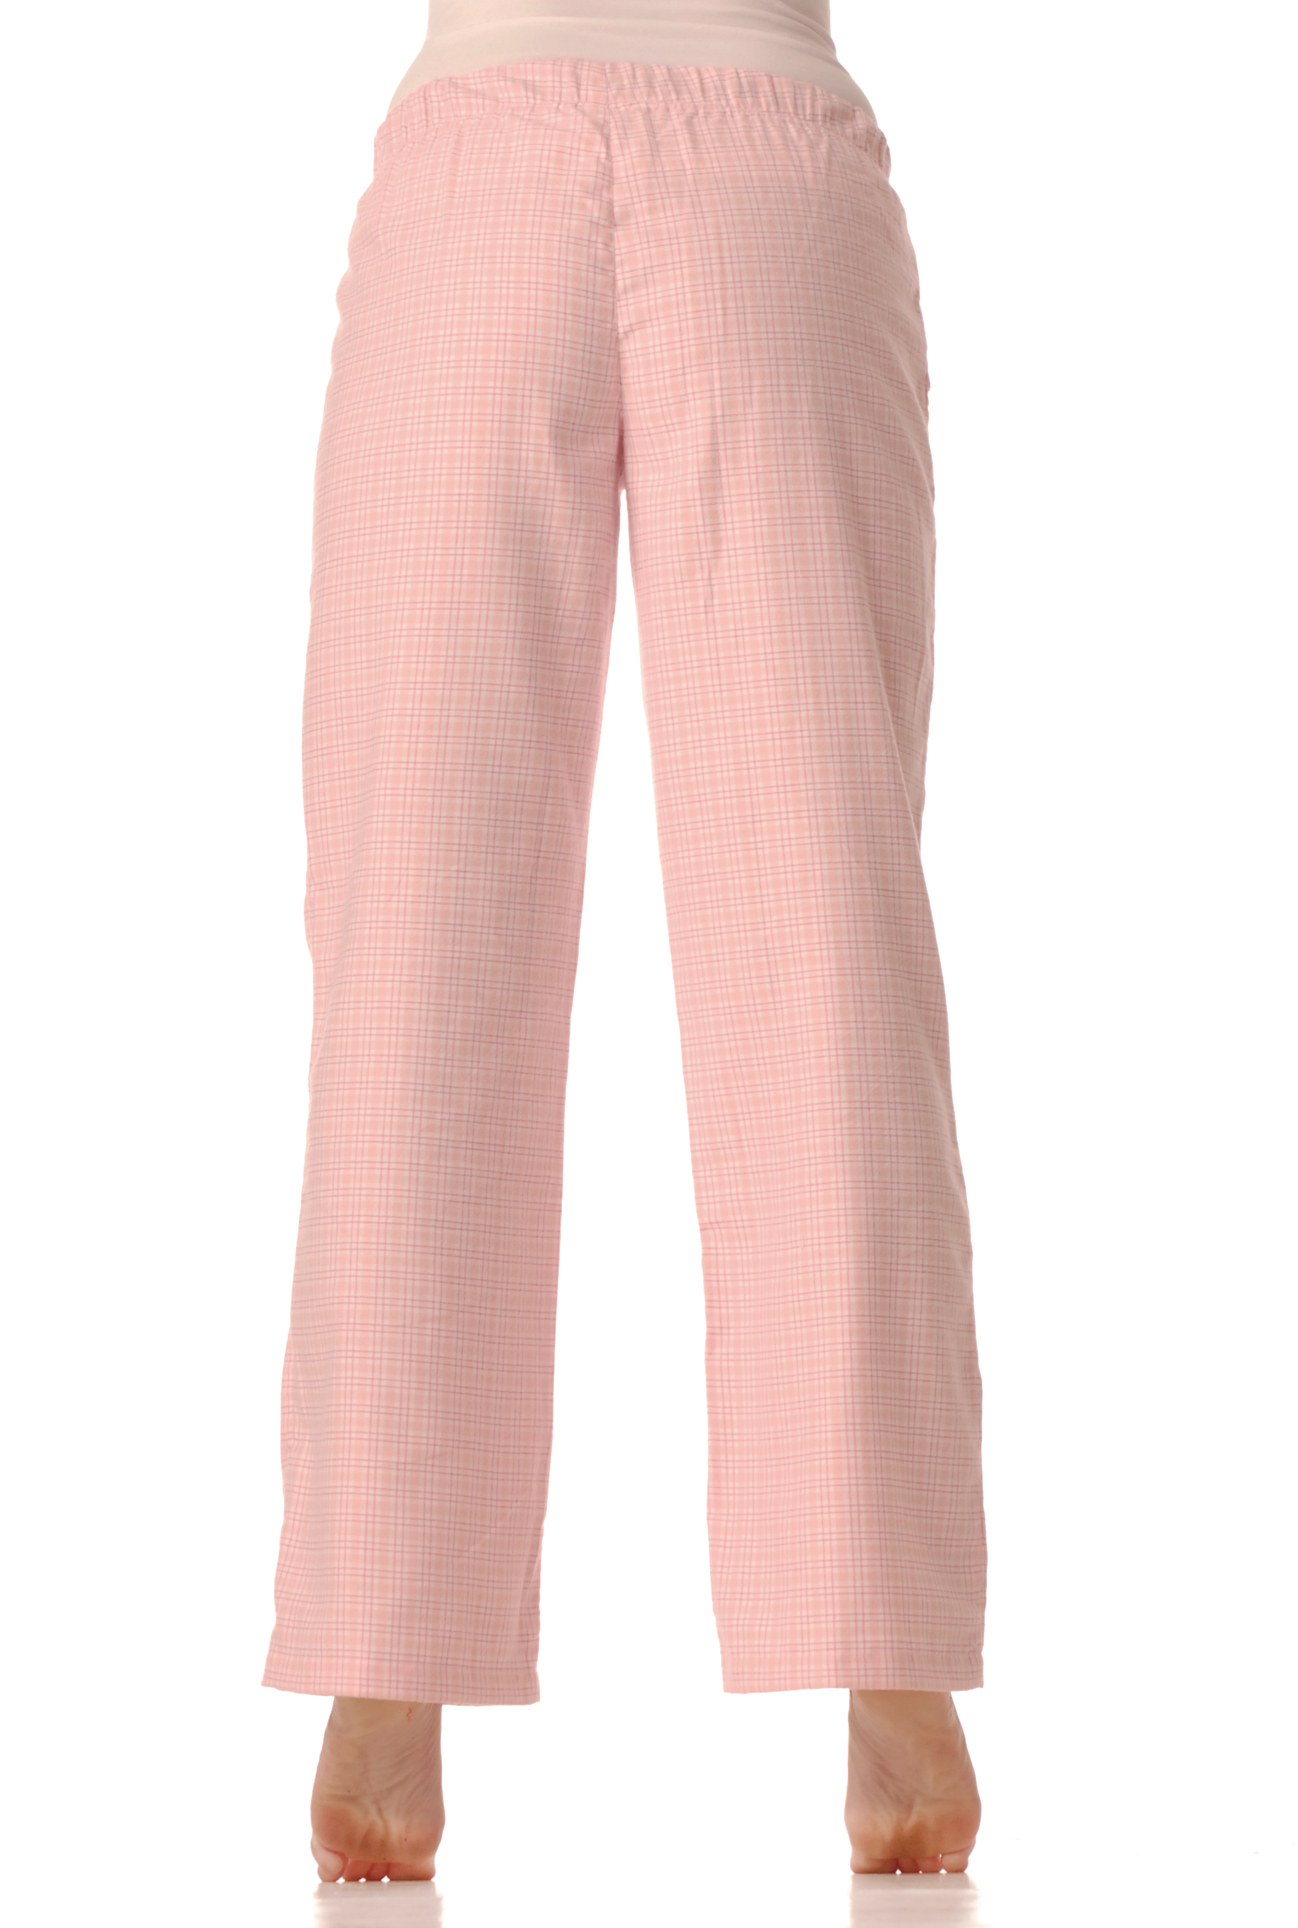 Flanelové pyžamové kalhoty - Růžová kostička